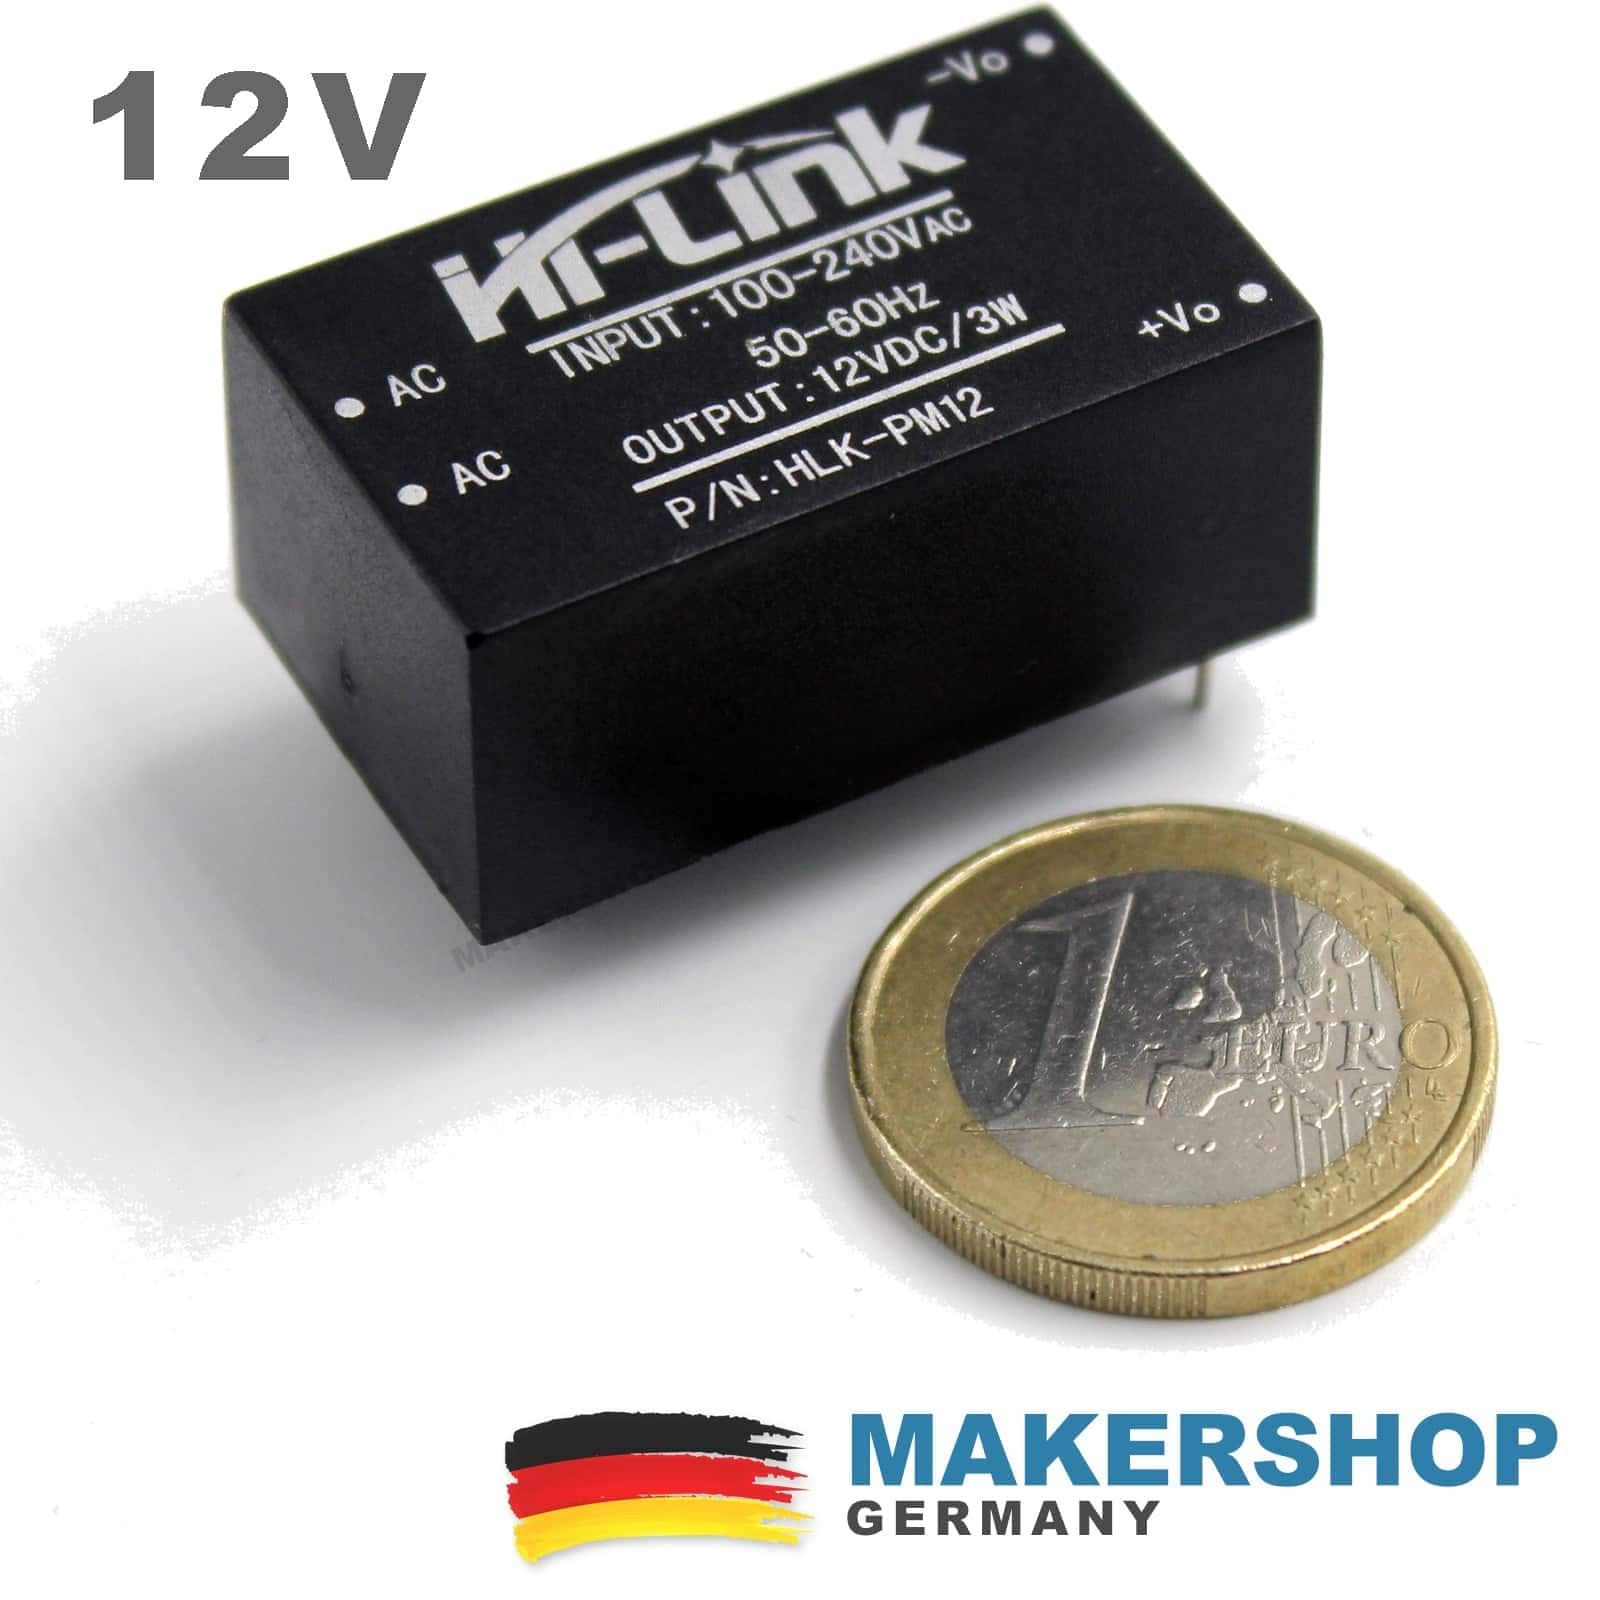 https://www.makershop.de/wp-content/uploads/2017/11/mini-up-netzteil-12v-3.jpg